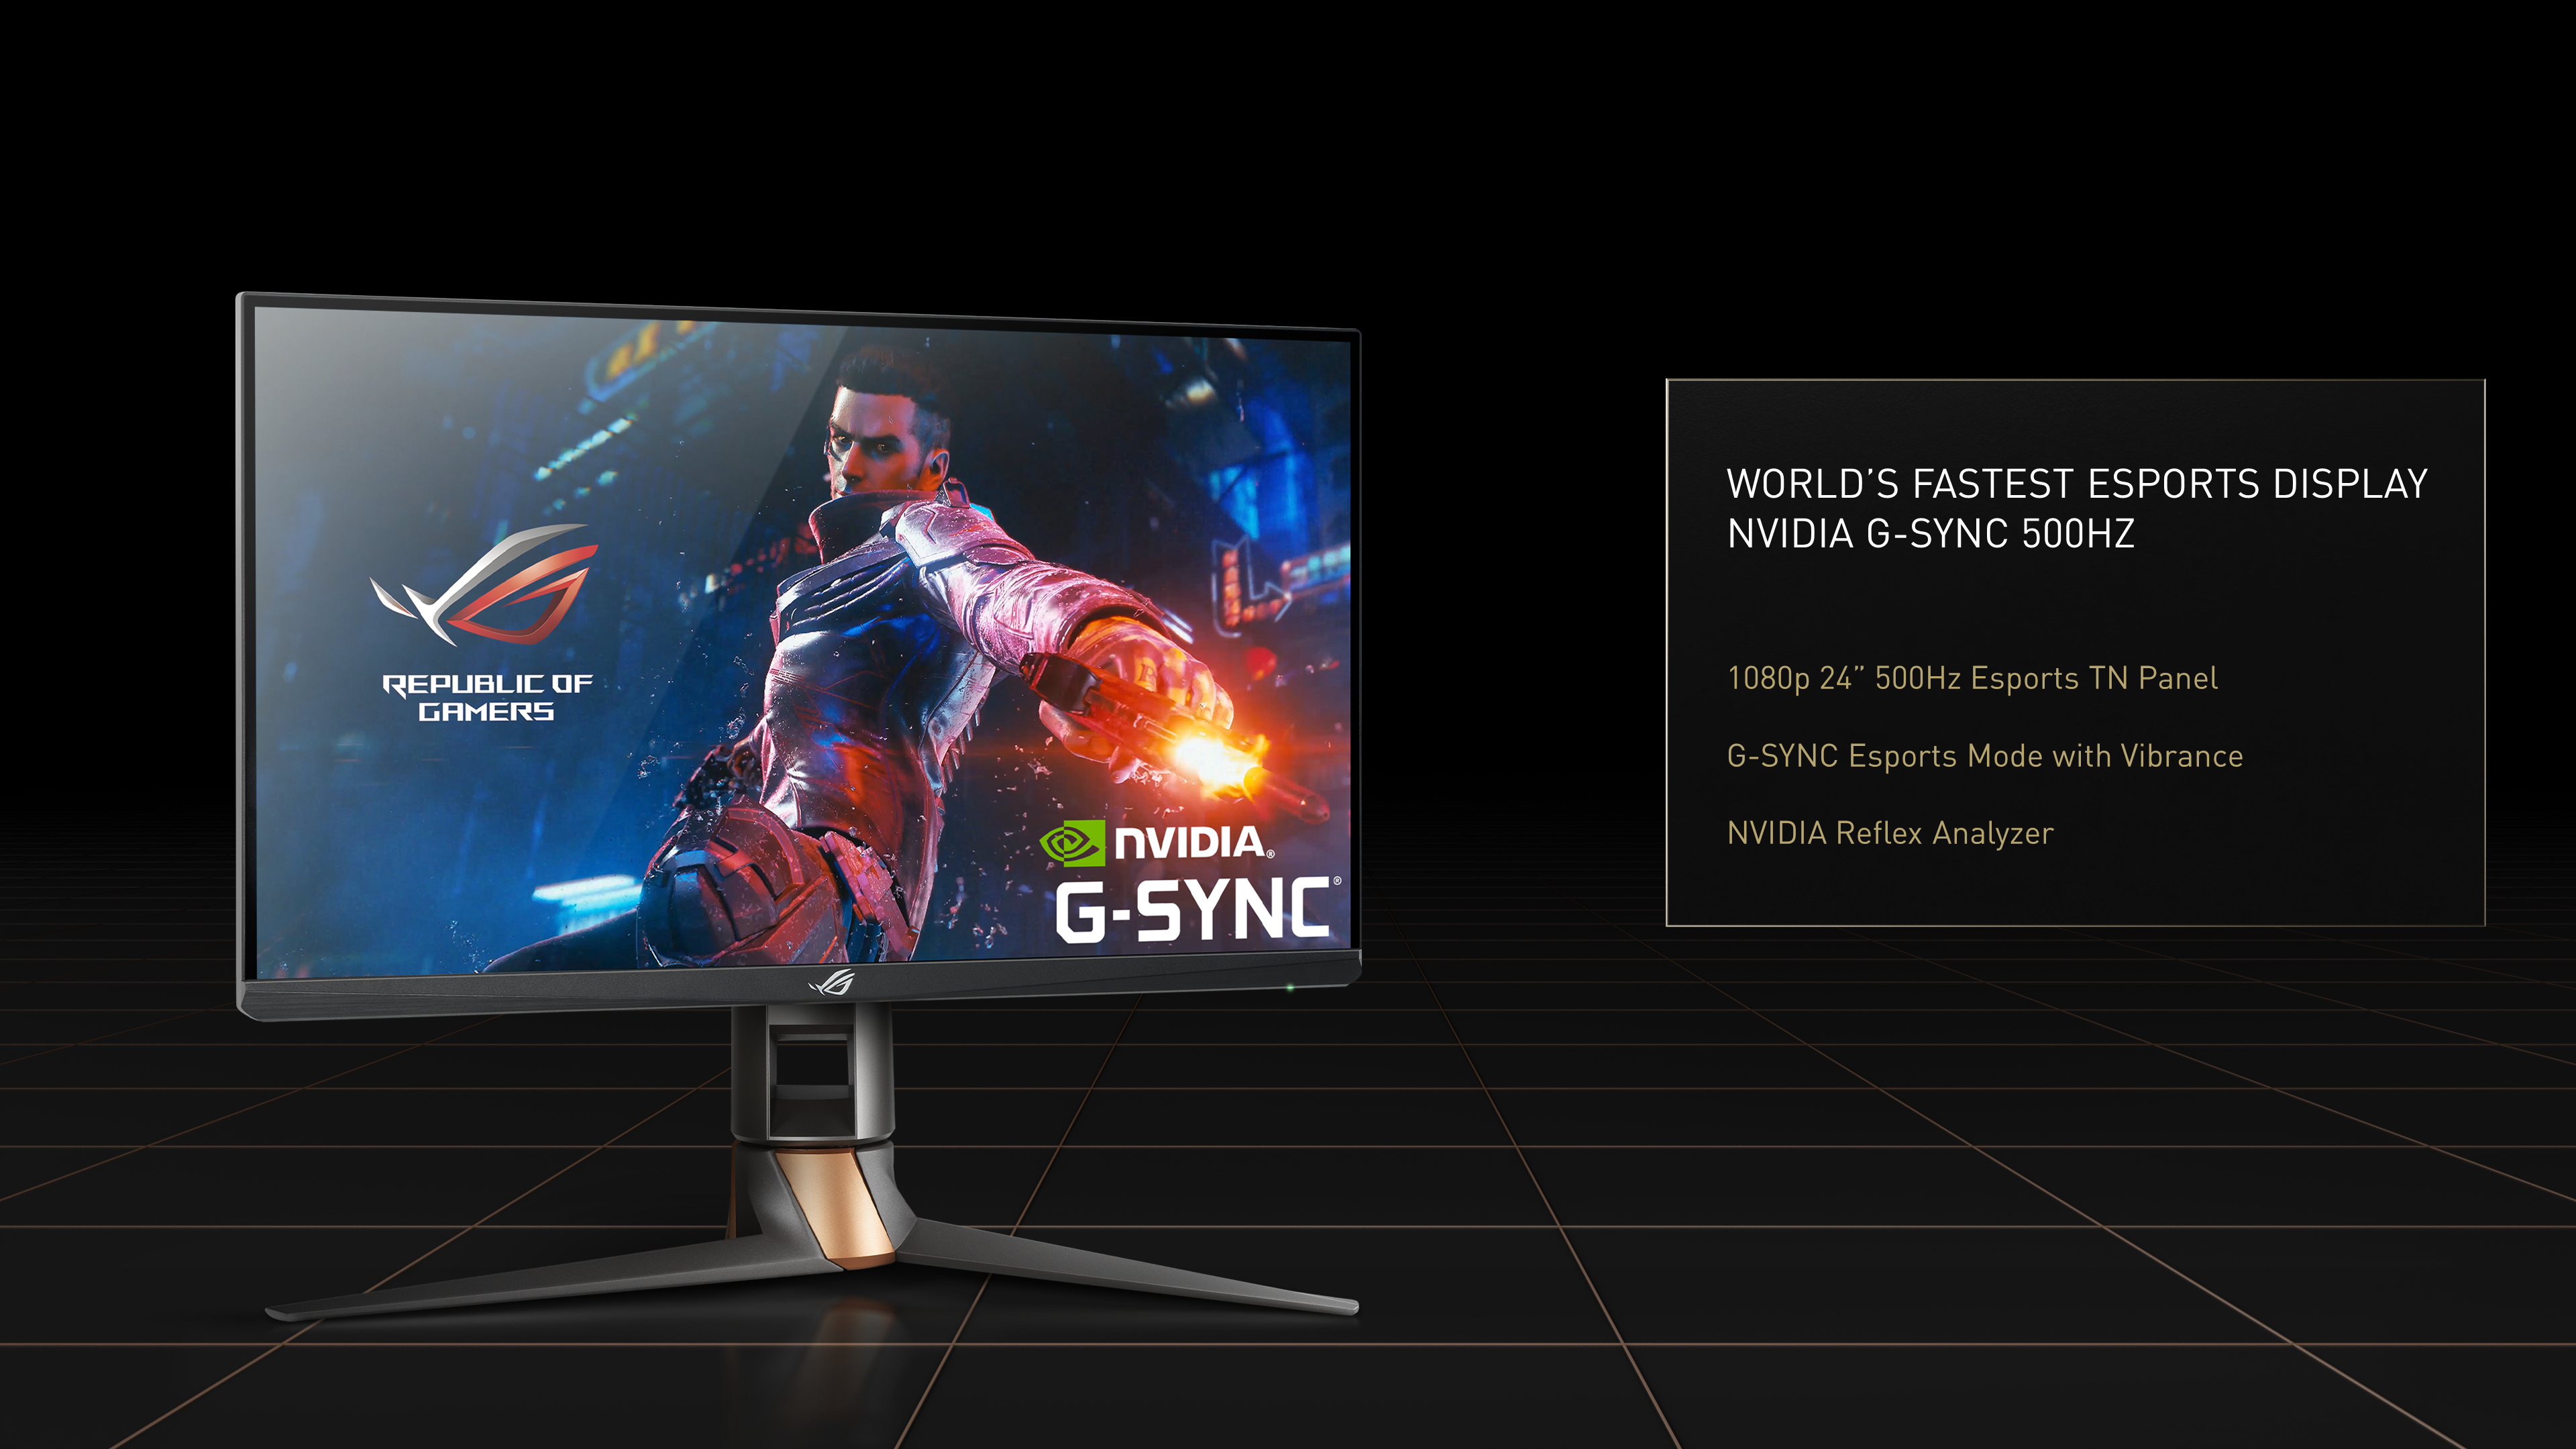 nvidia geforce rtx computex 2022 asus 500hz gsync gaming monitor - ASUS ROG Swift اولین مانیتور گیمینگ 500hz دنیا